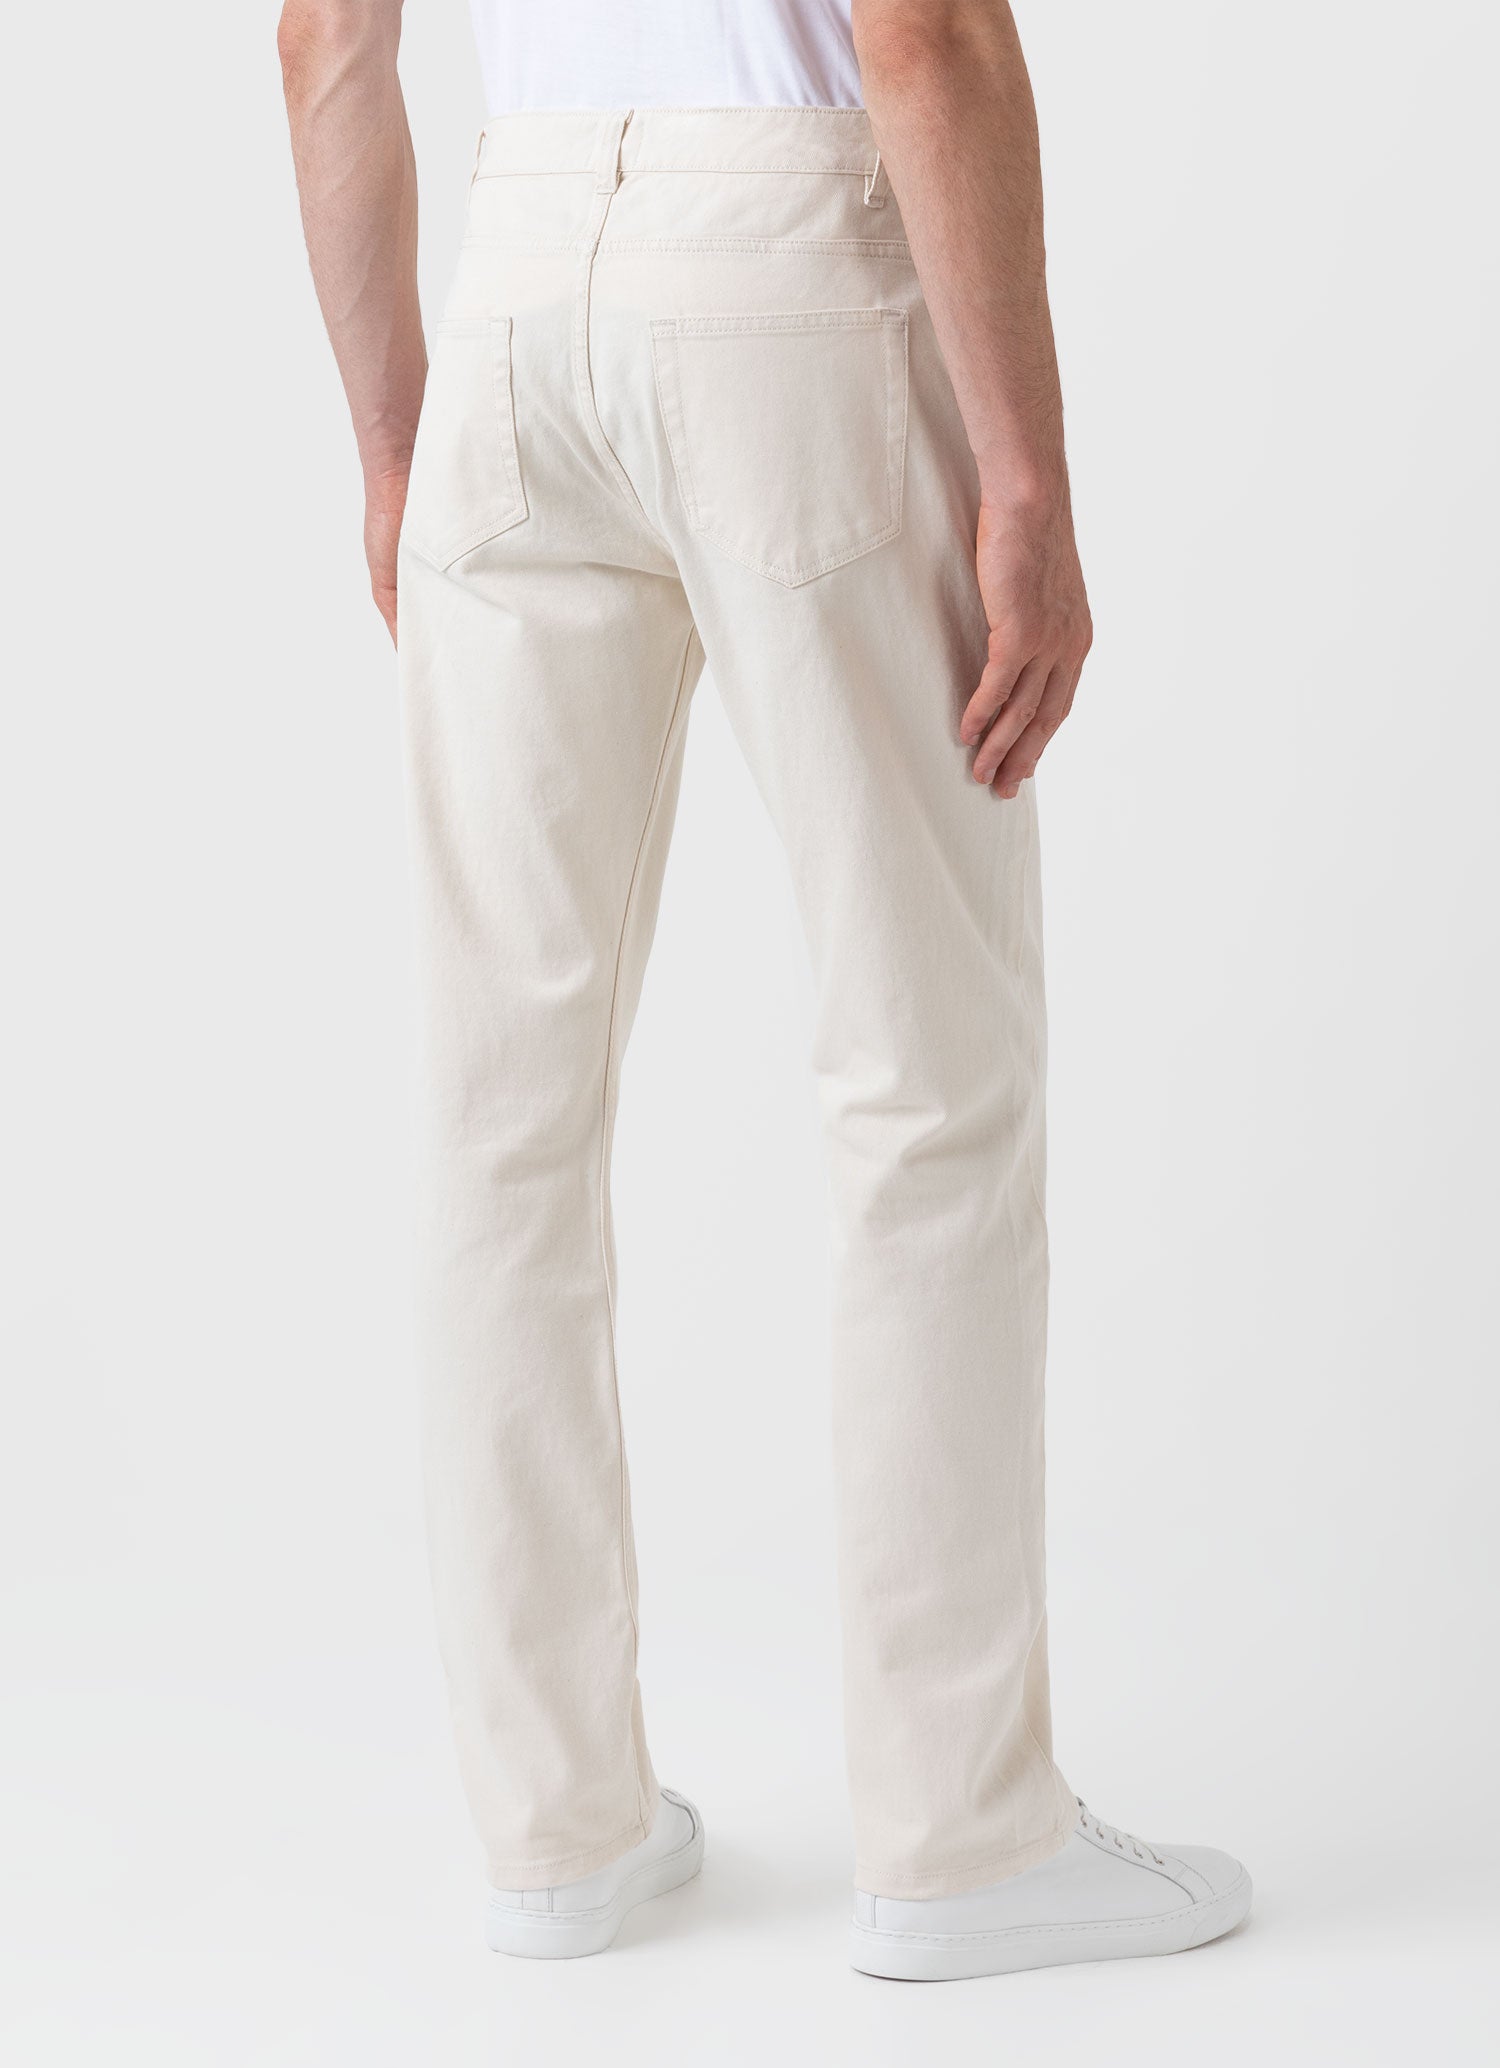 Men's Cotton Drill 5 Pocket Trouser in Undyed | Sunspel